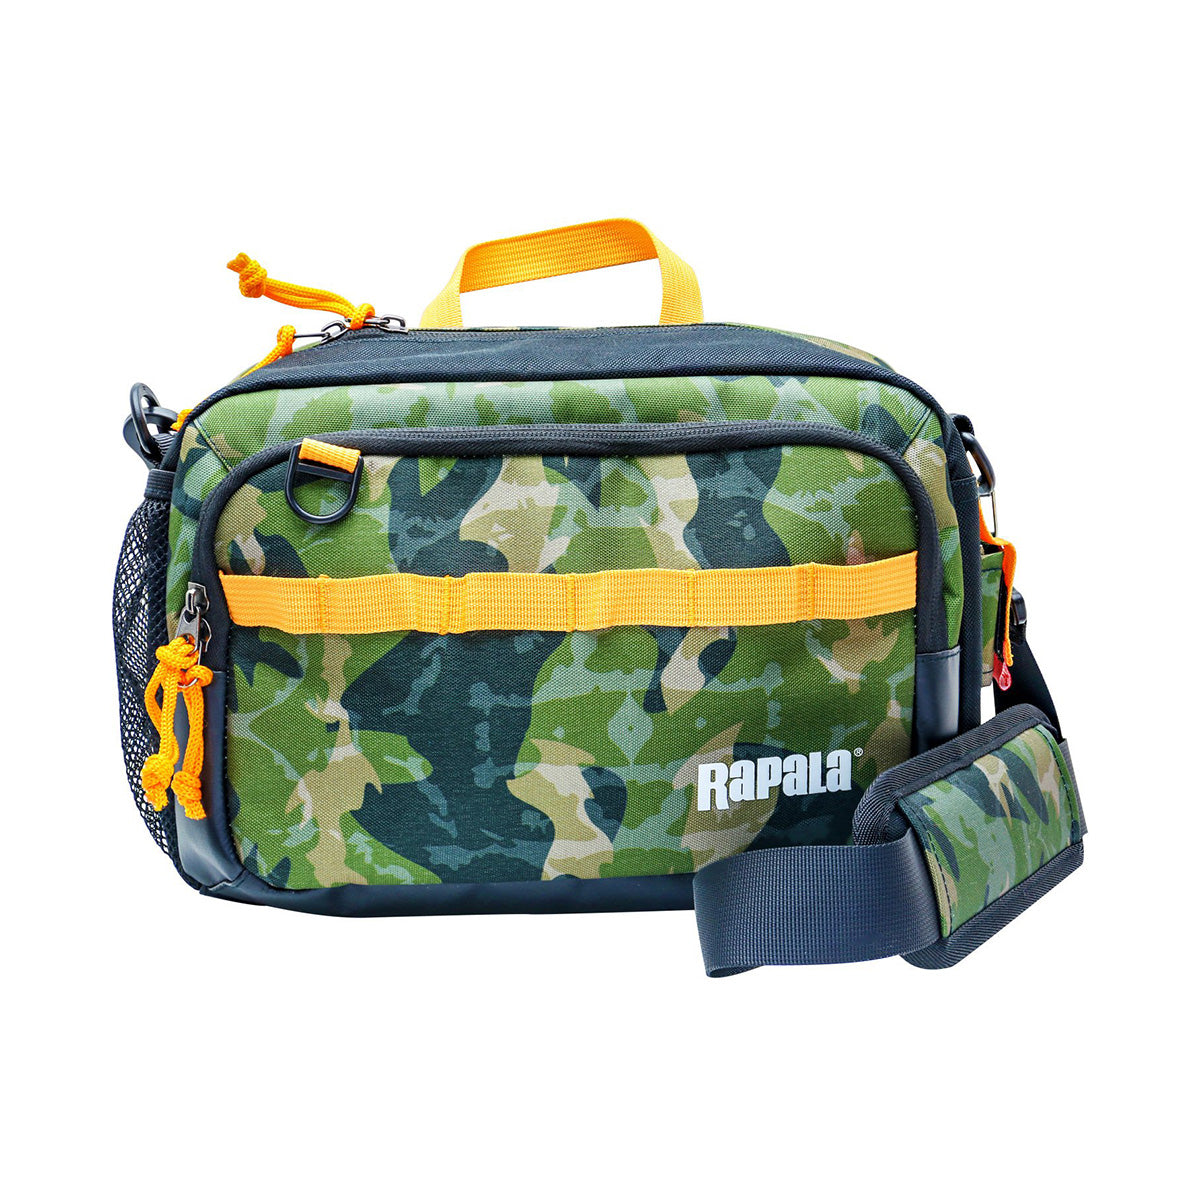 Rapala Jungle Messenger Bag -  - Mansfield Hunting & Fishing - Products to prepare for Corona Virus